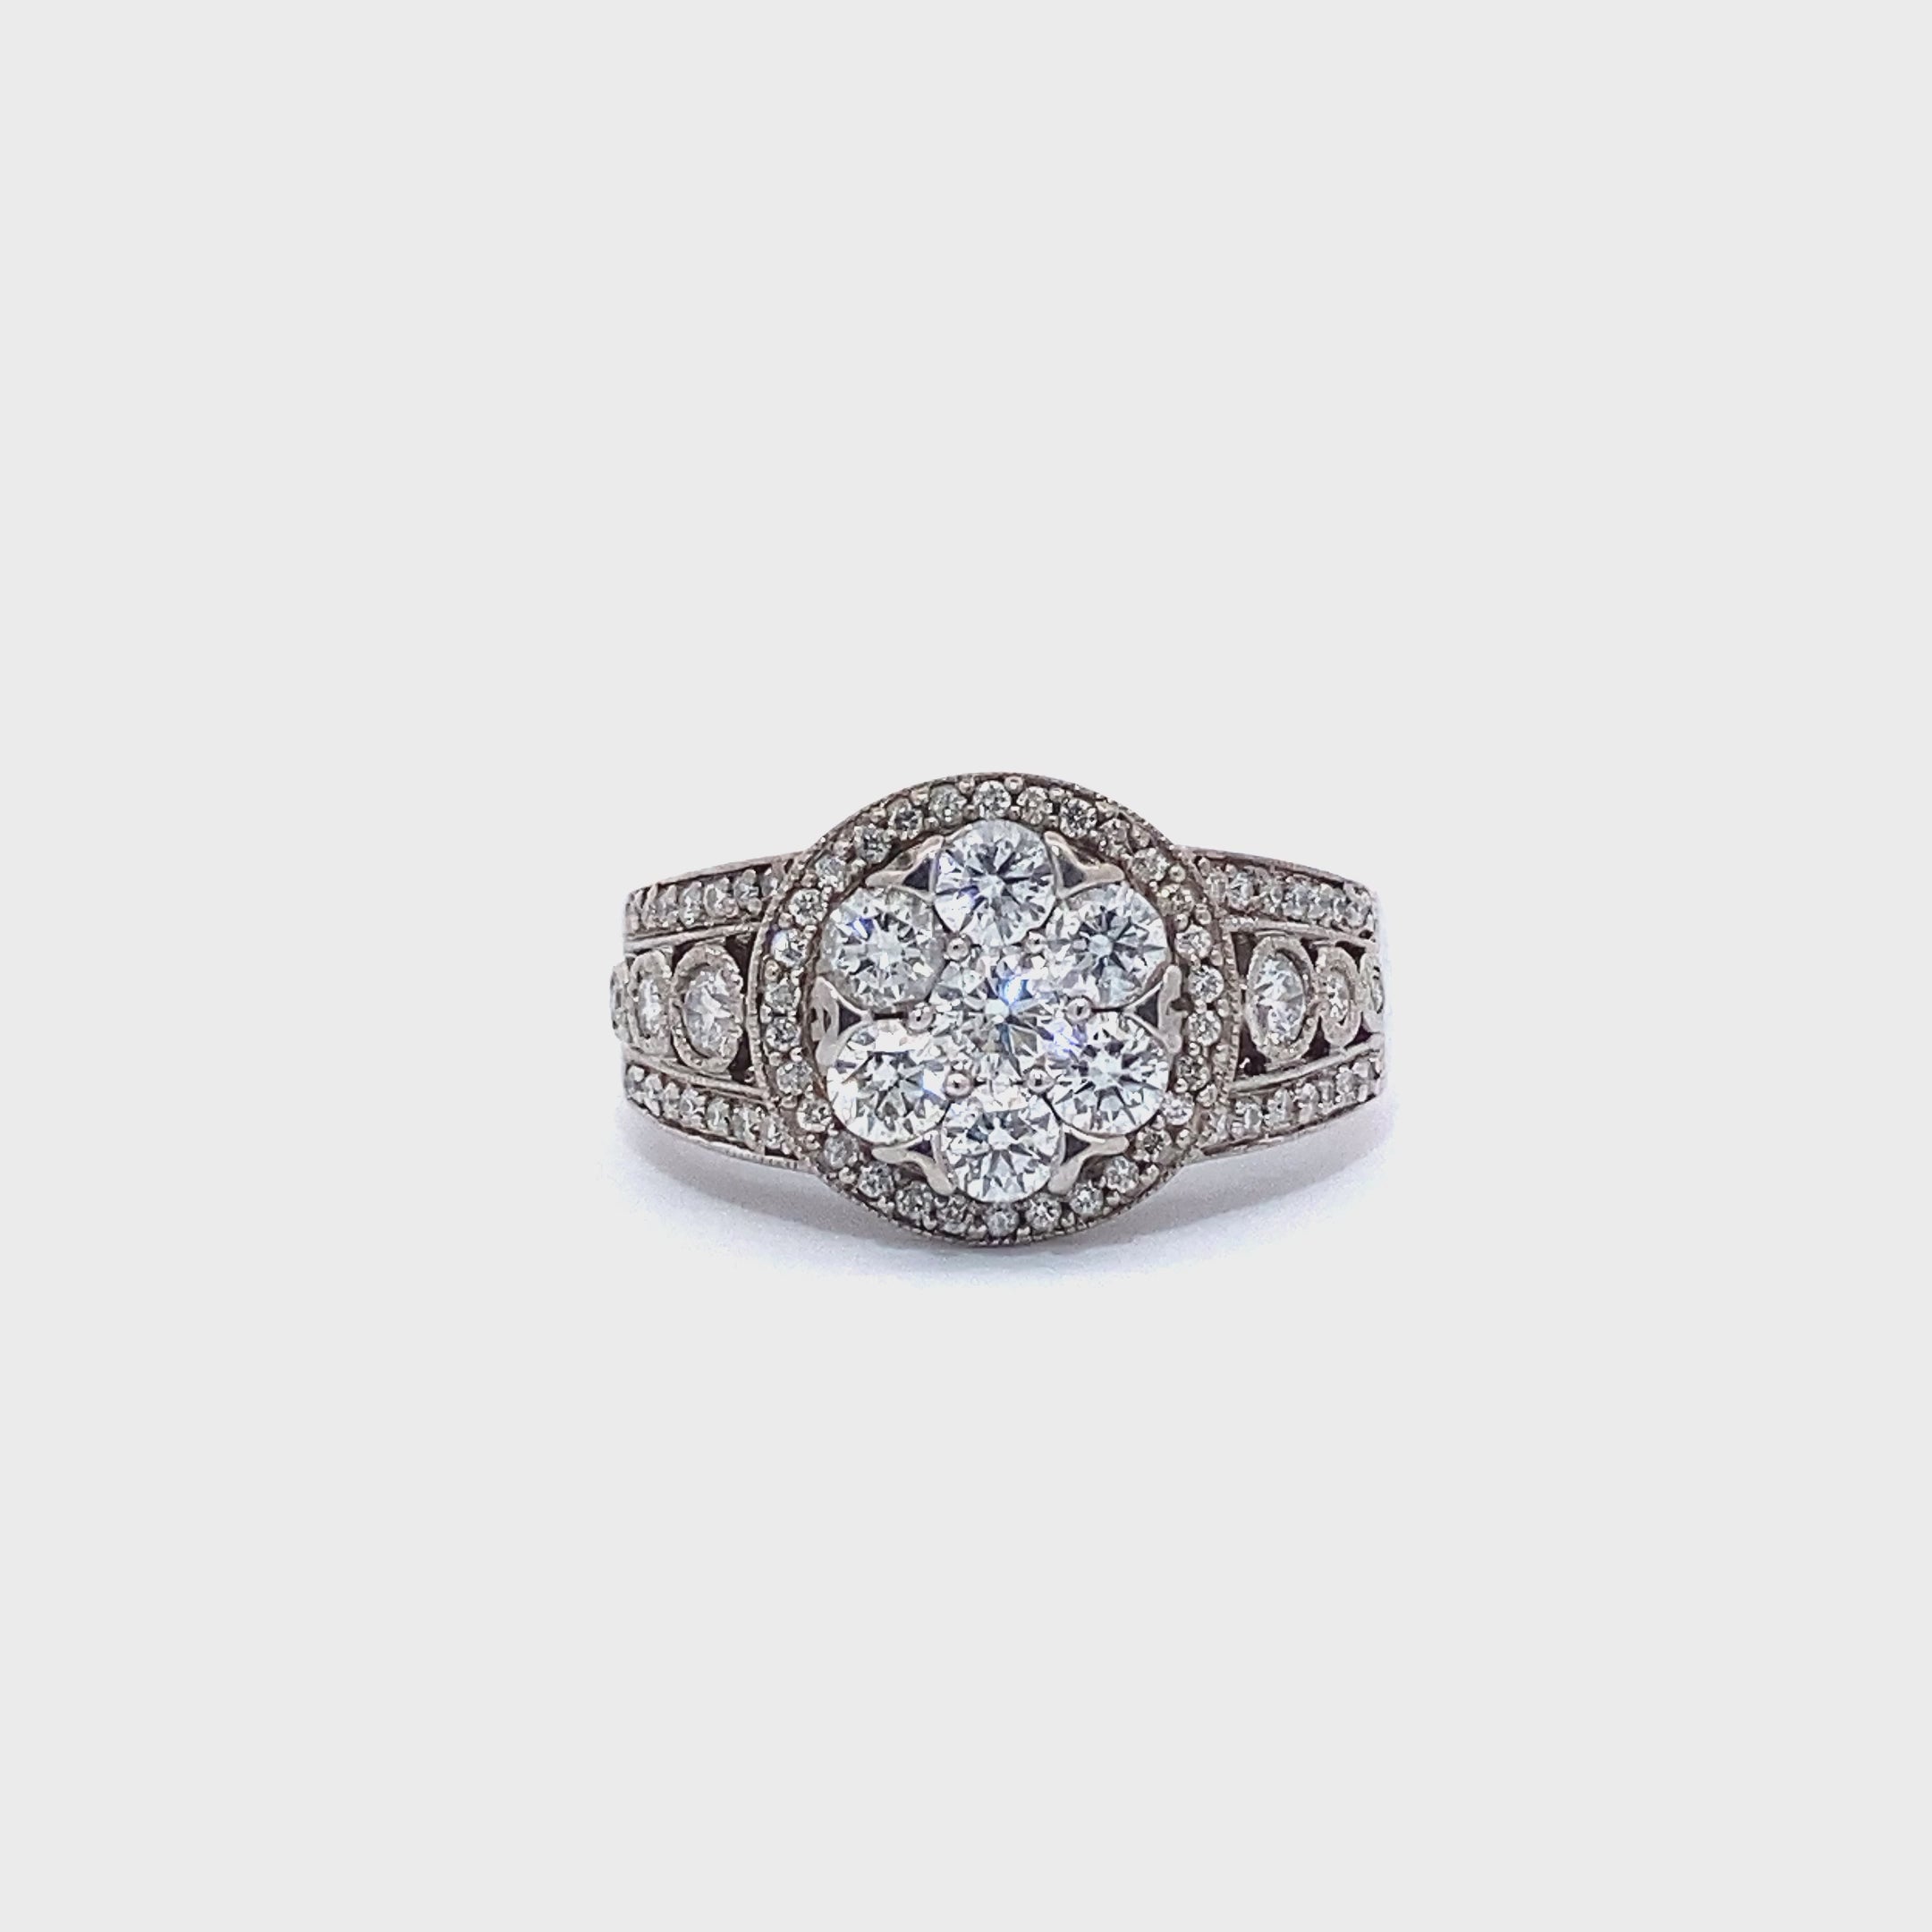 14K White Gold Women's Diamond Ring - 1.65ct